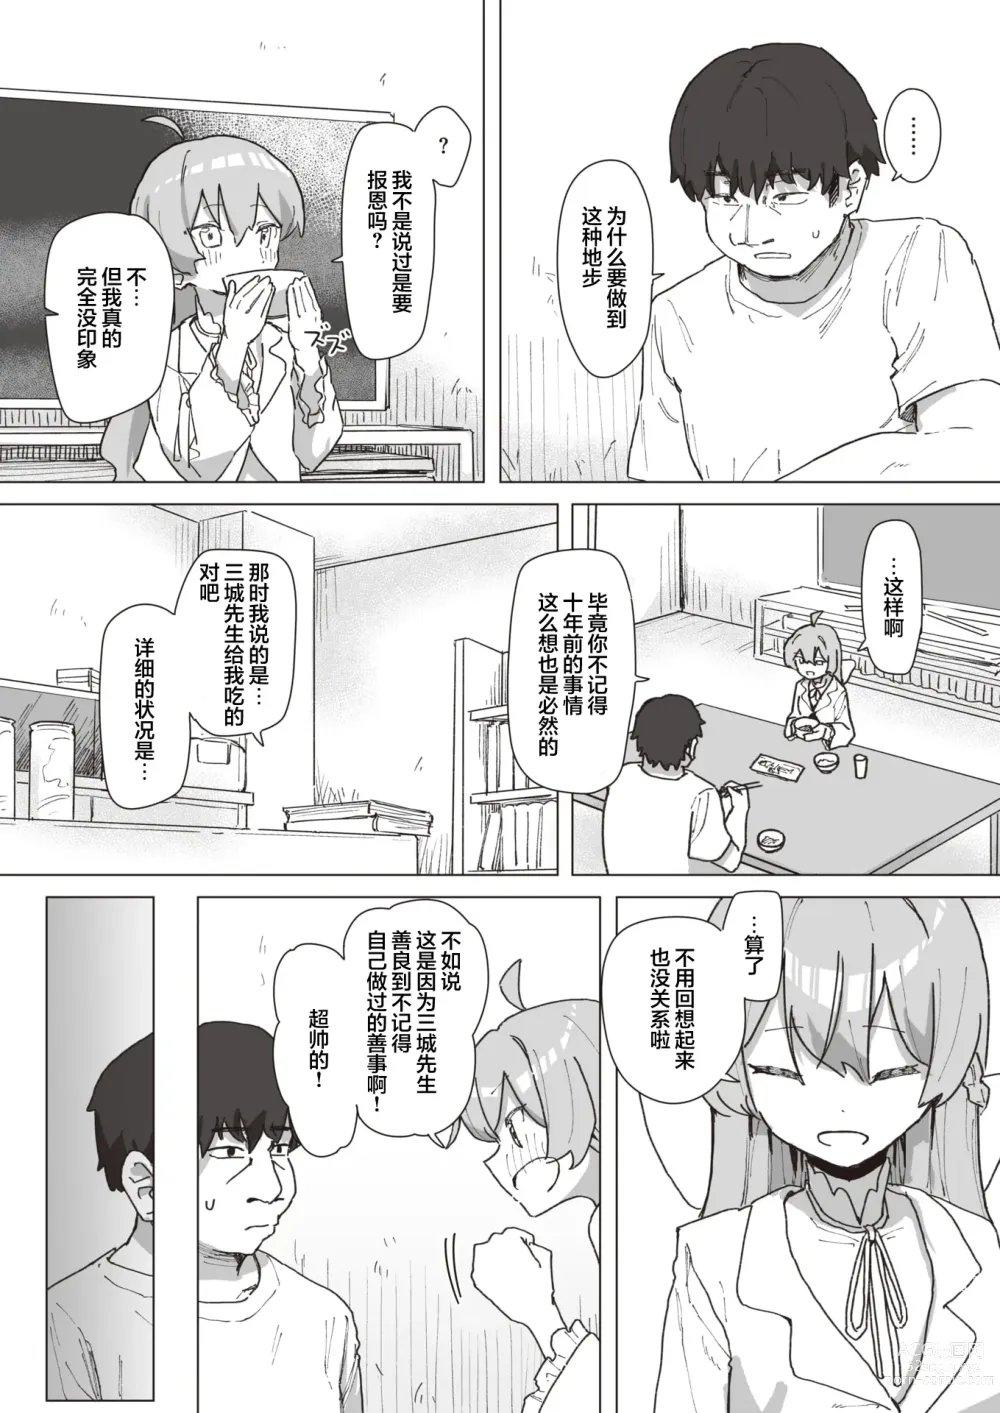 Page 4 of manga Mahou Shoujo no Ongaeshi Chuuhen - Magical Girls Giving Back